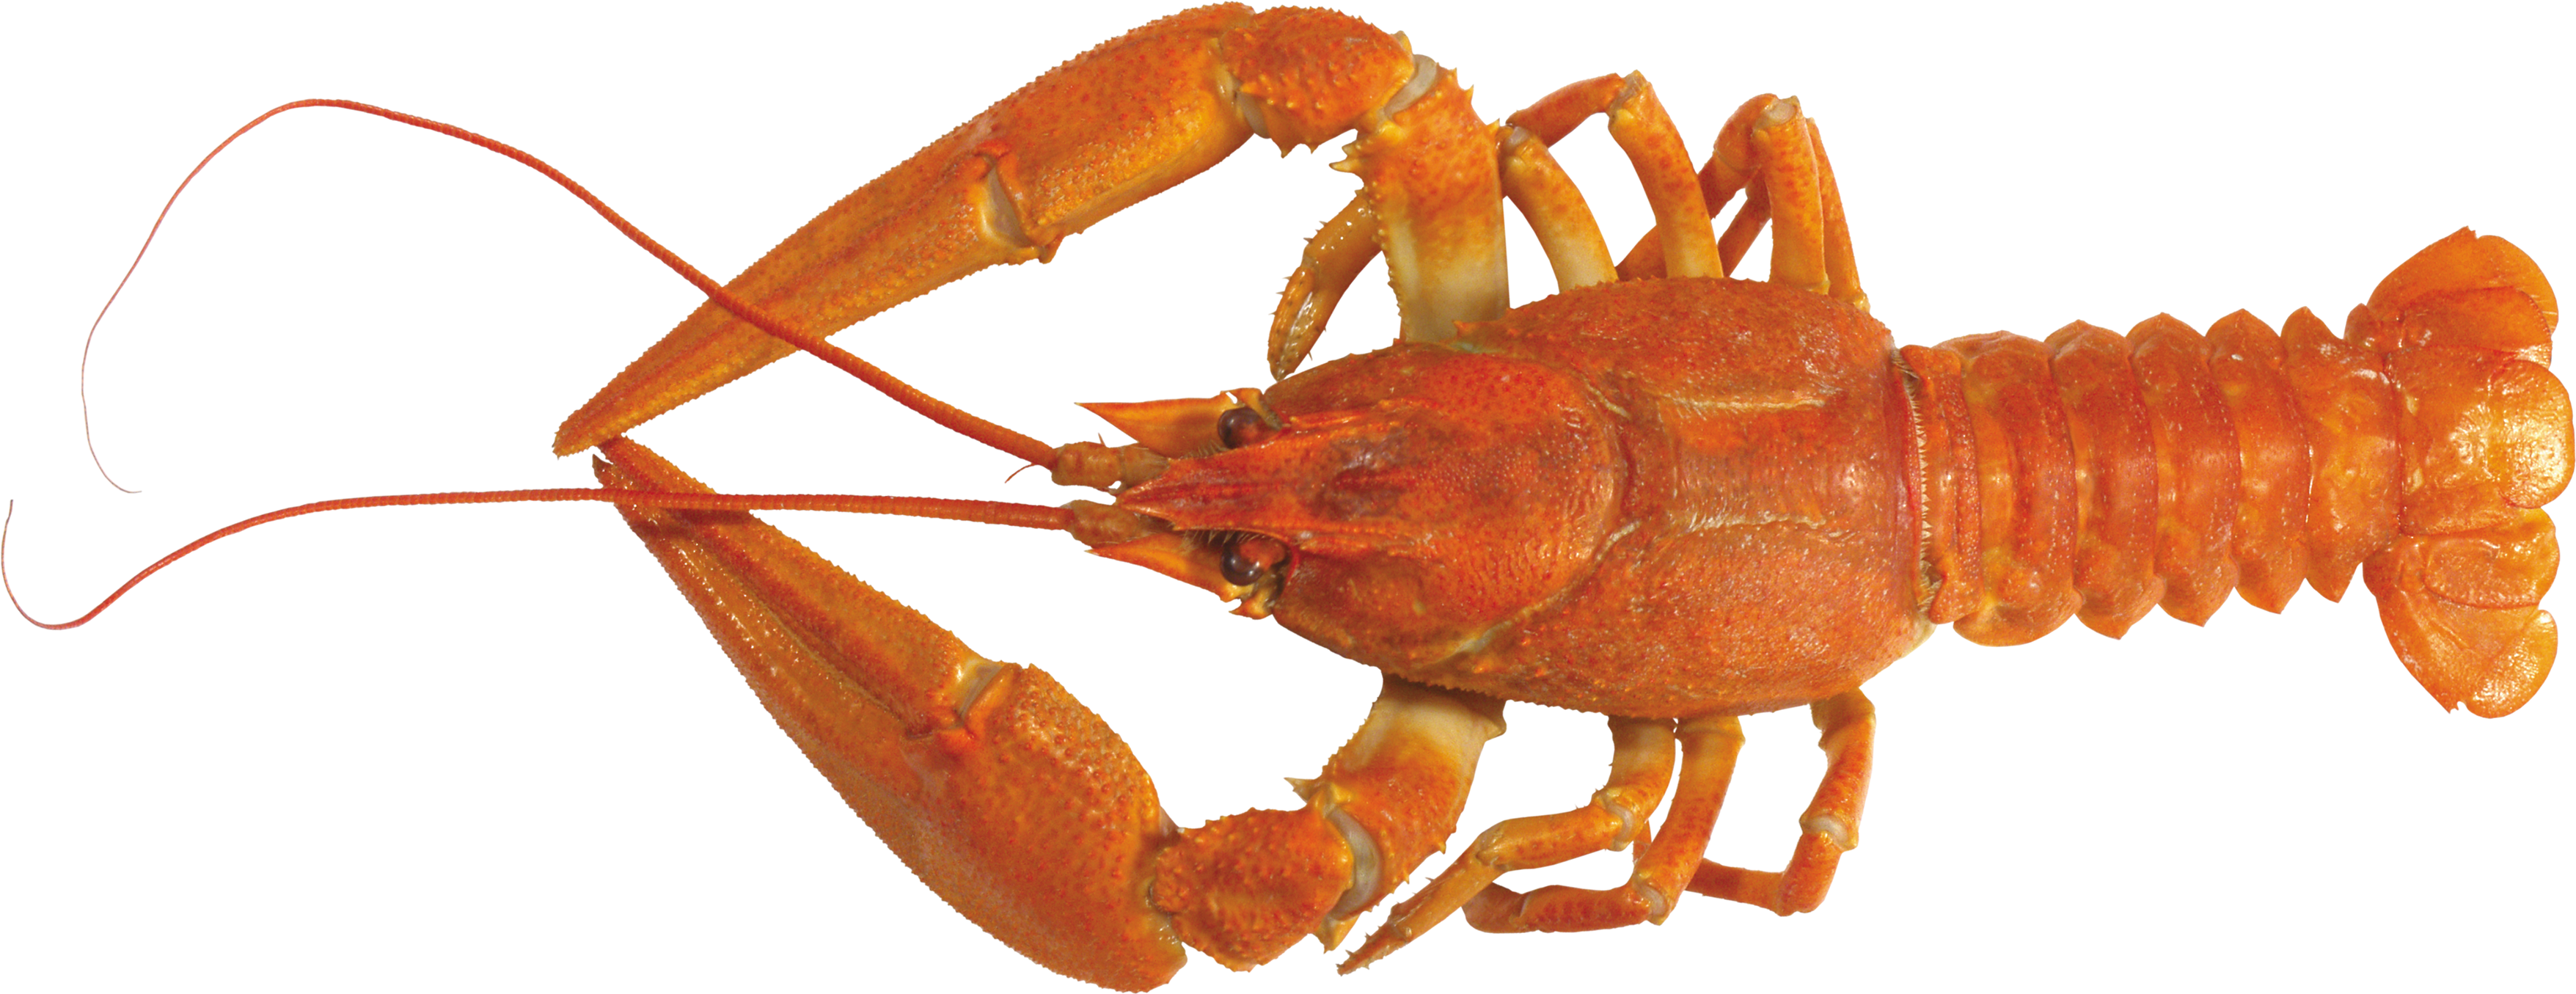 Juvenile American Lobster PNG Background Image